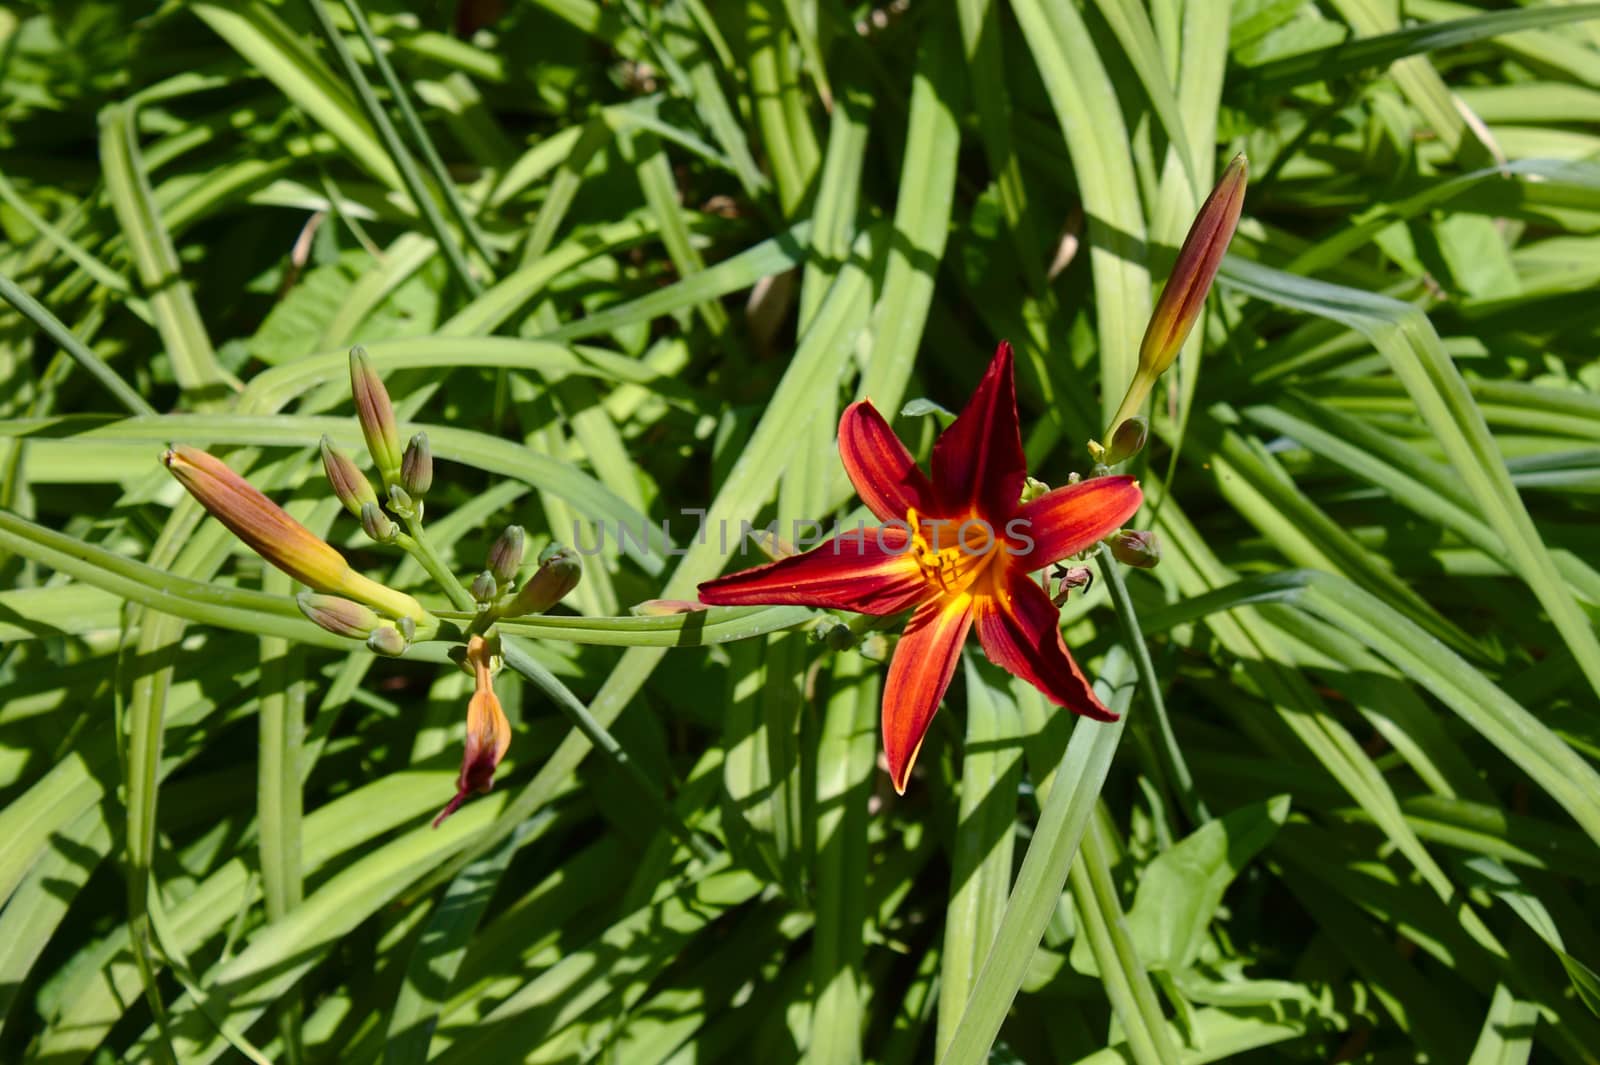 red lily flowers in the garden by martina_unbehauen